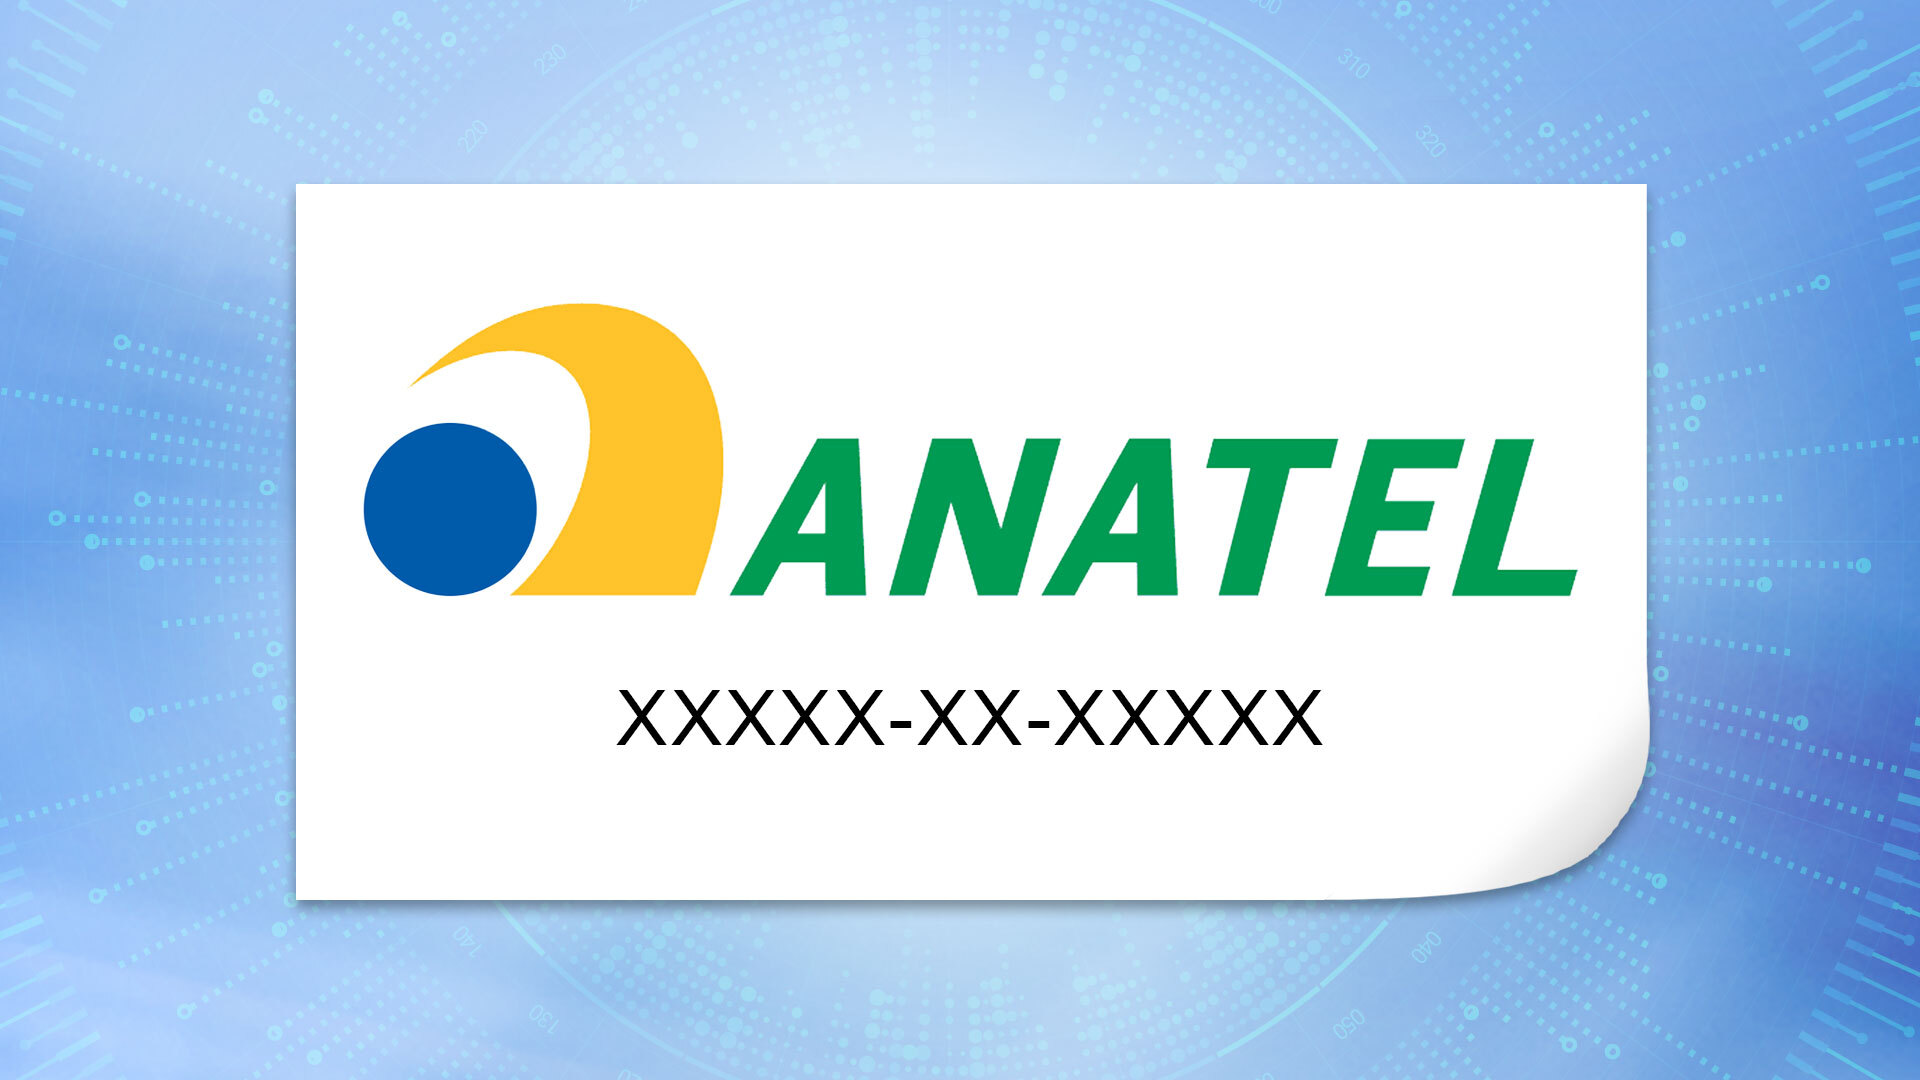 Anatel certification label